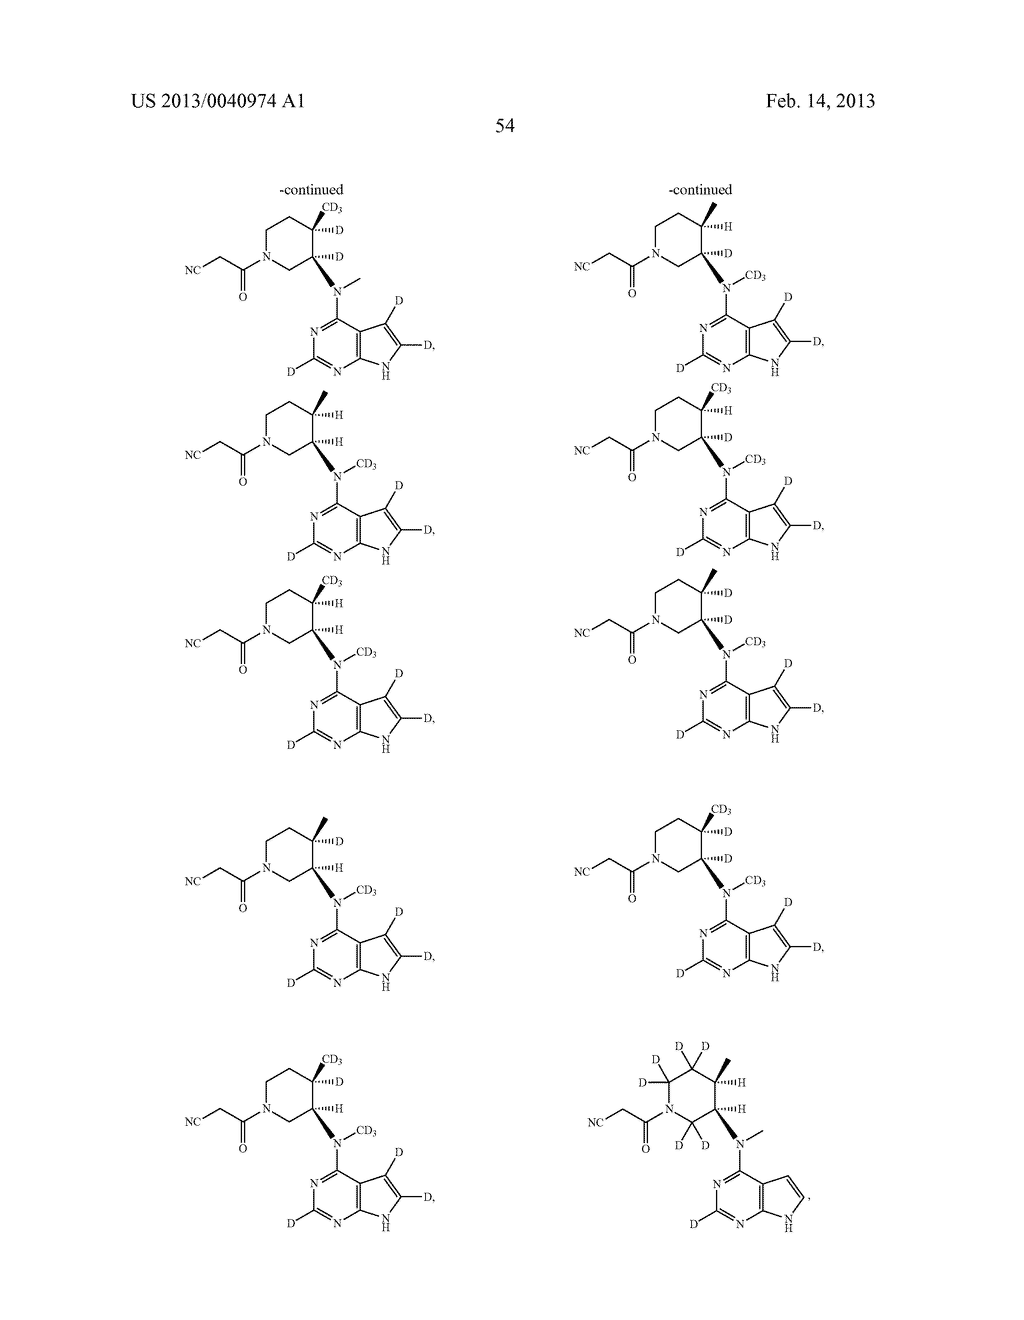 PIPERIDINE INHIBITORS OF JANUS KINASE 3 - diagram, schematic, and image 55